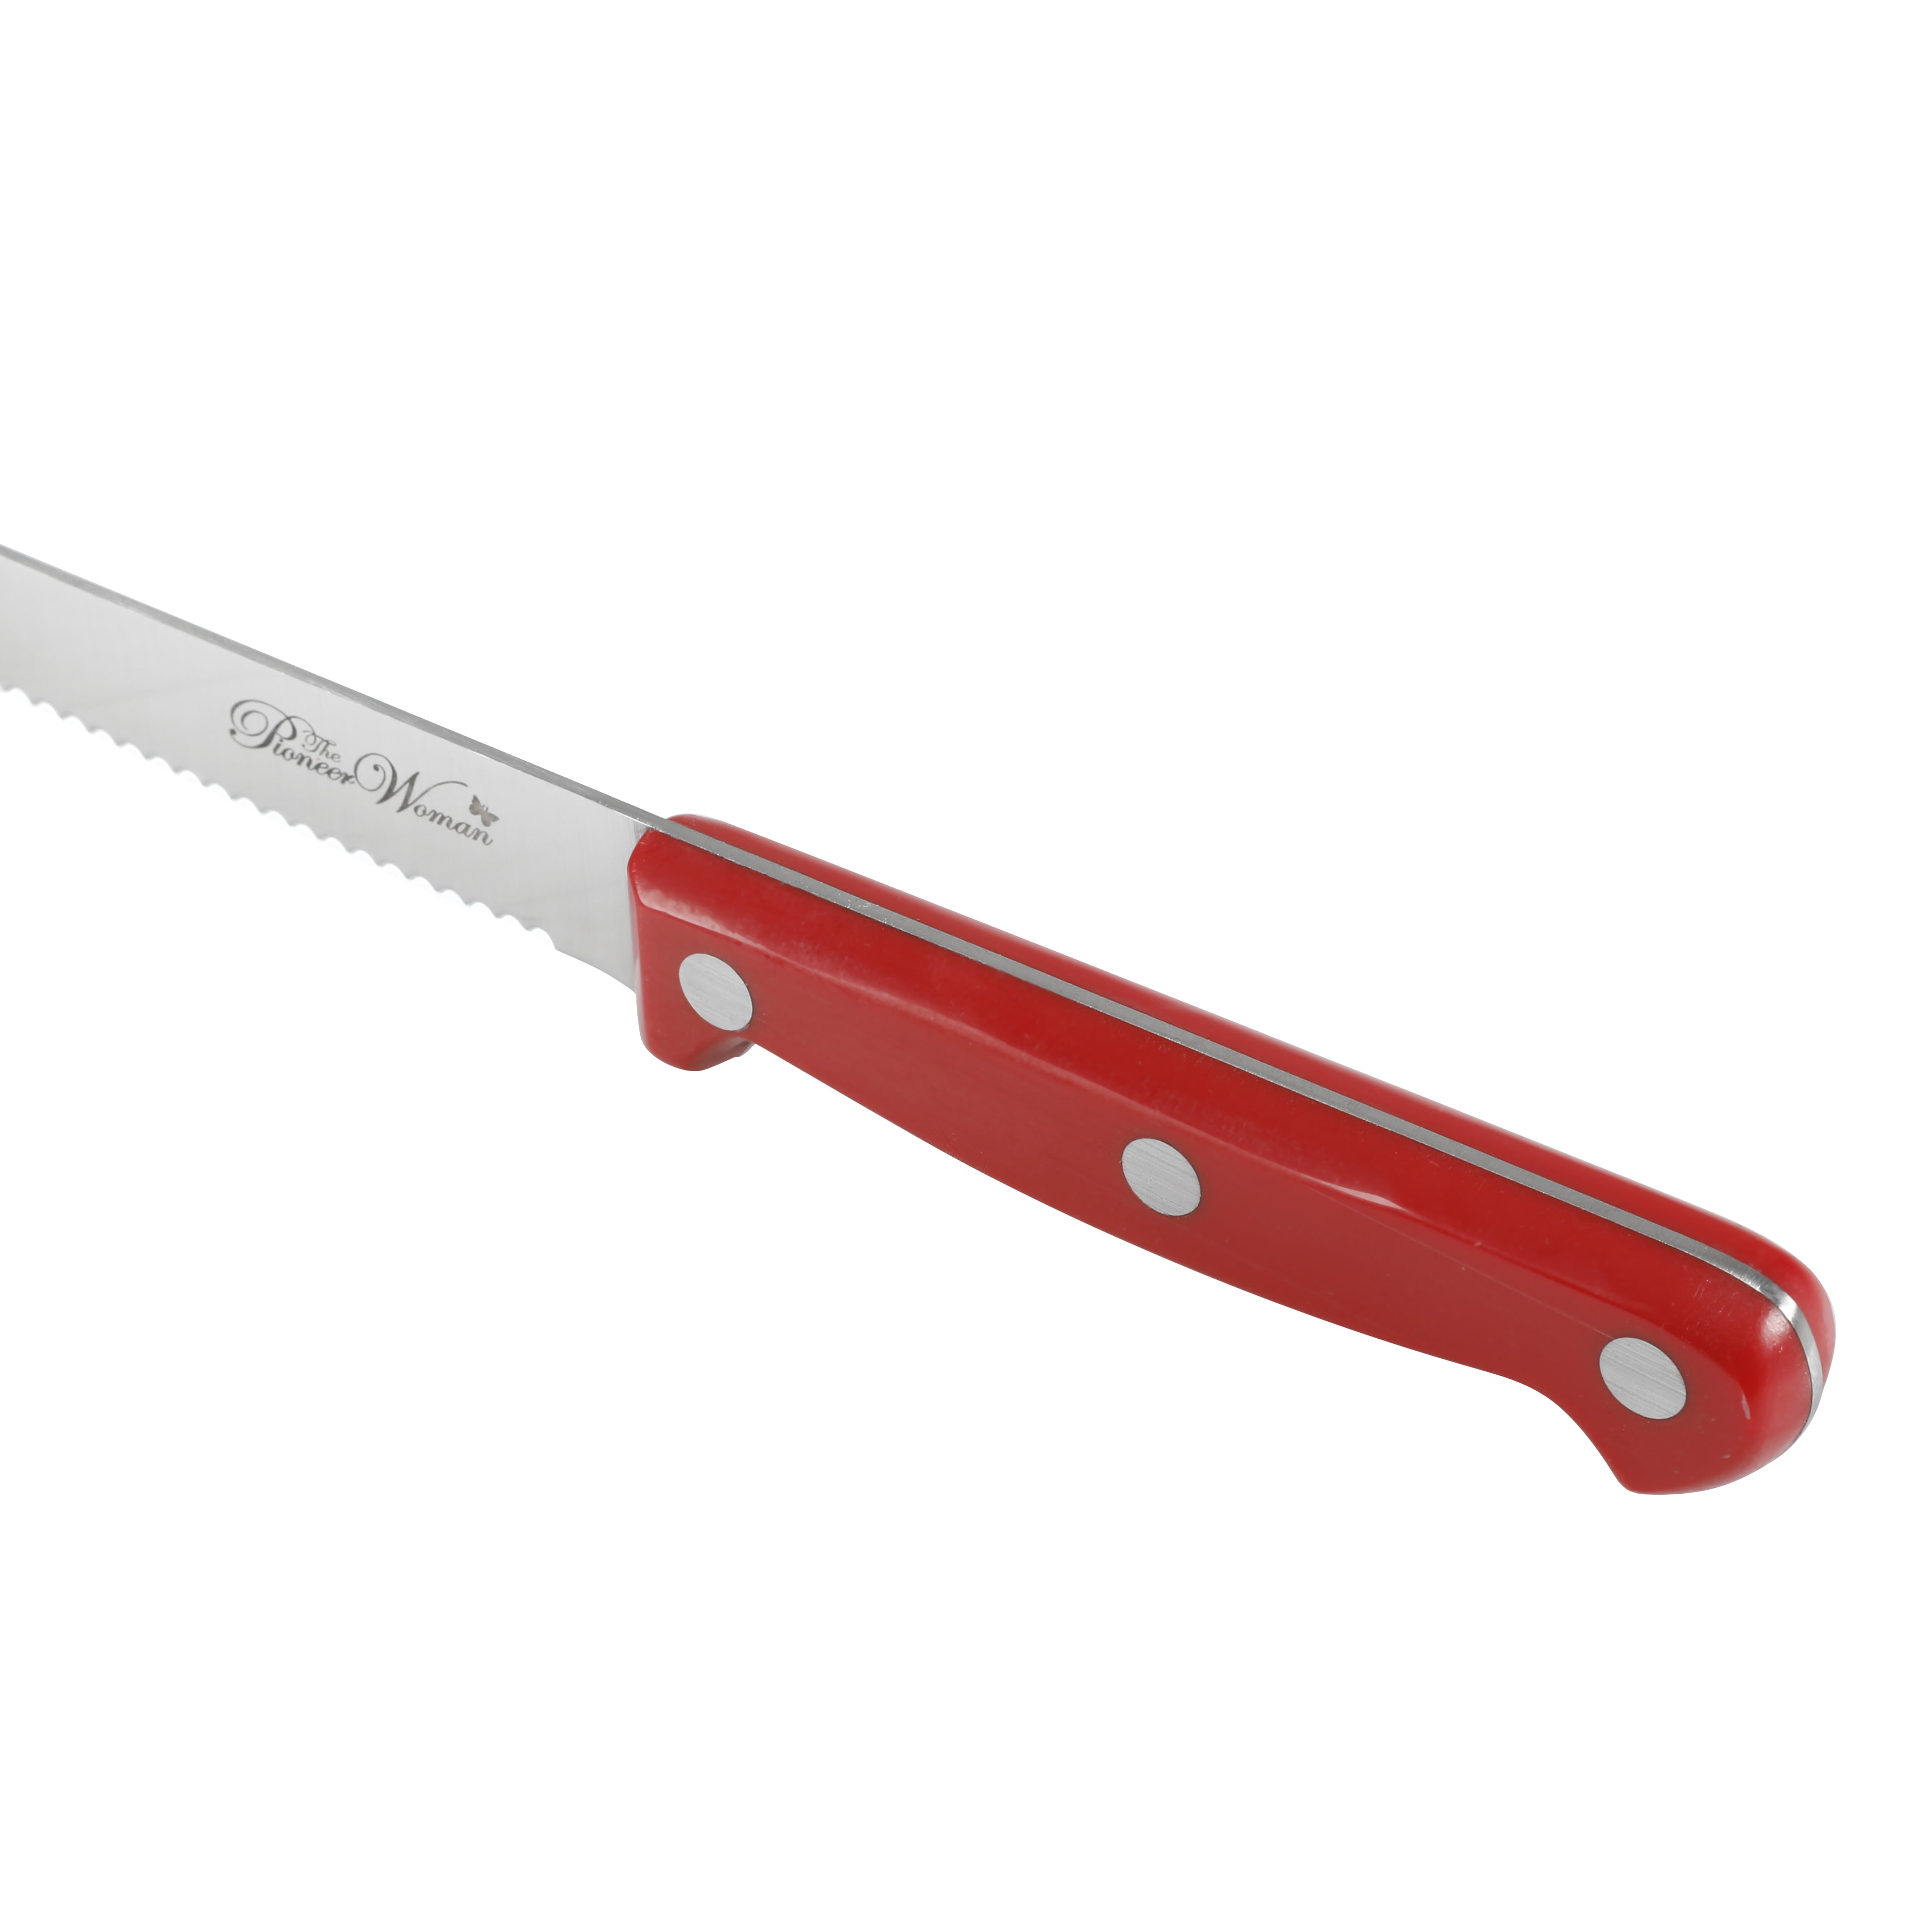 Wusthof Plum 4 Piece 4.5 Steak Knife Set - KnifeCenter - 1069560402 -  Discontinued